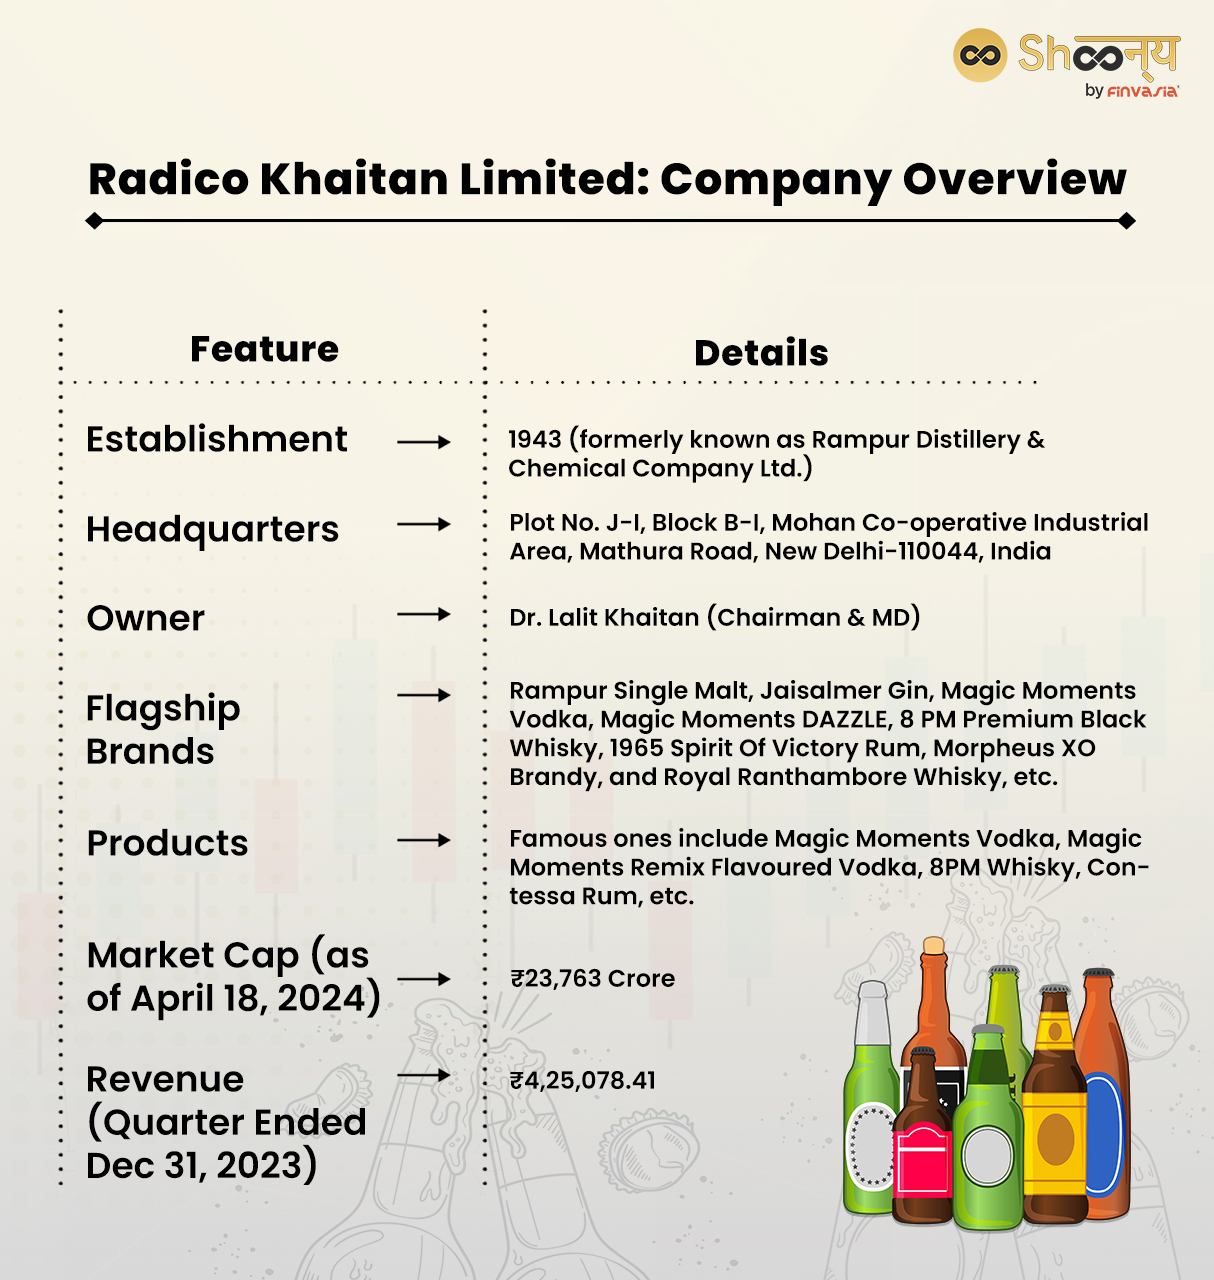 Radico Khaitan Limited: Company Overview